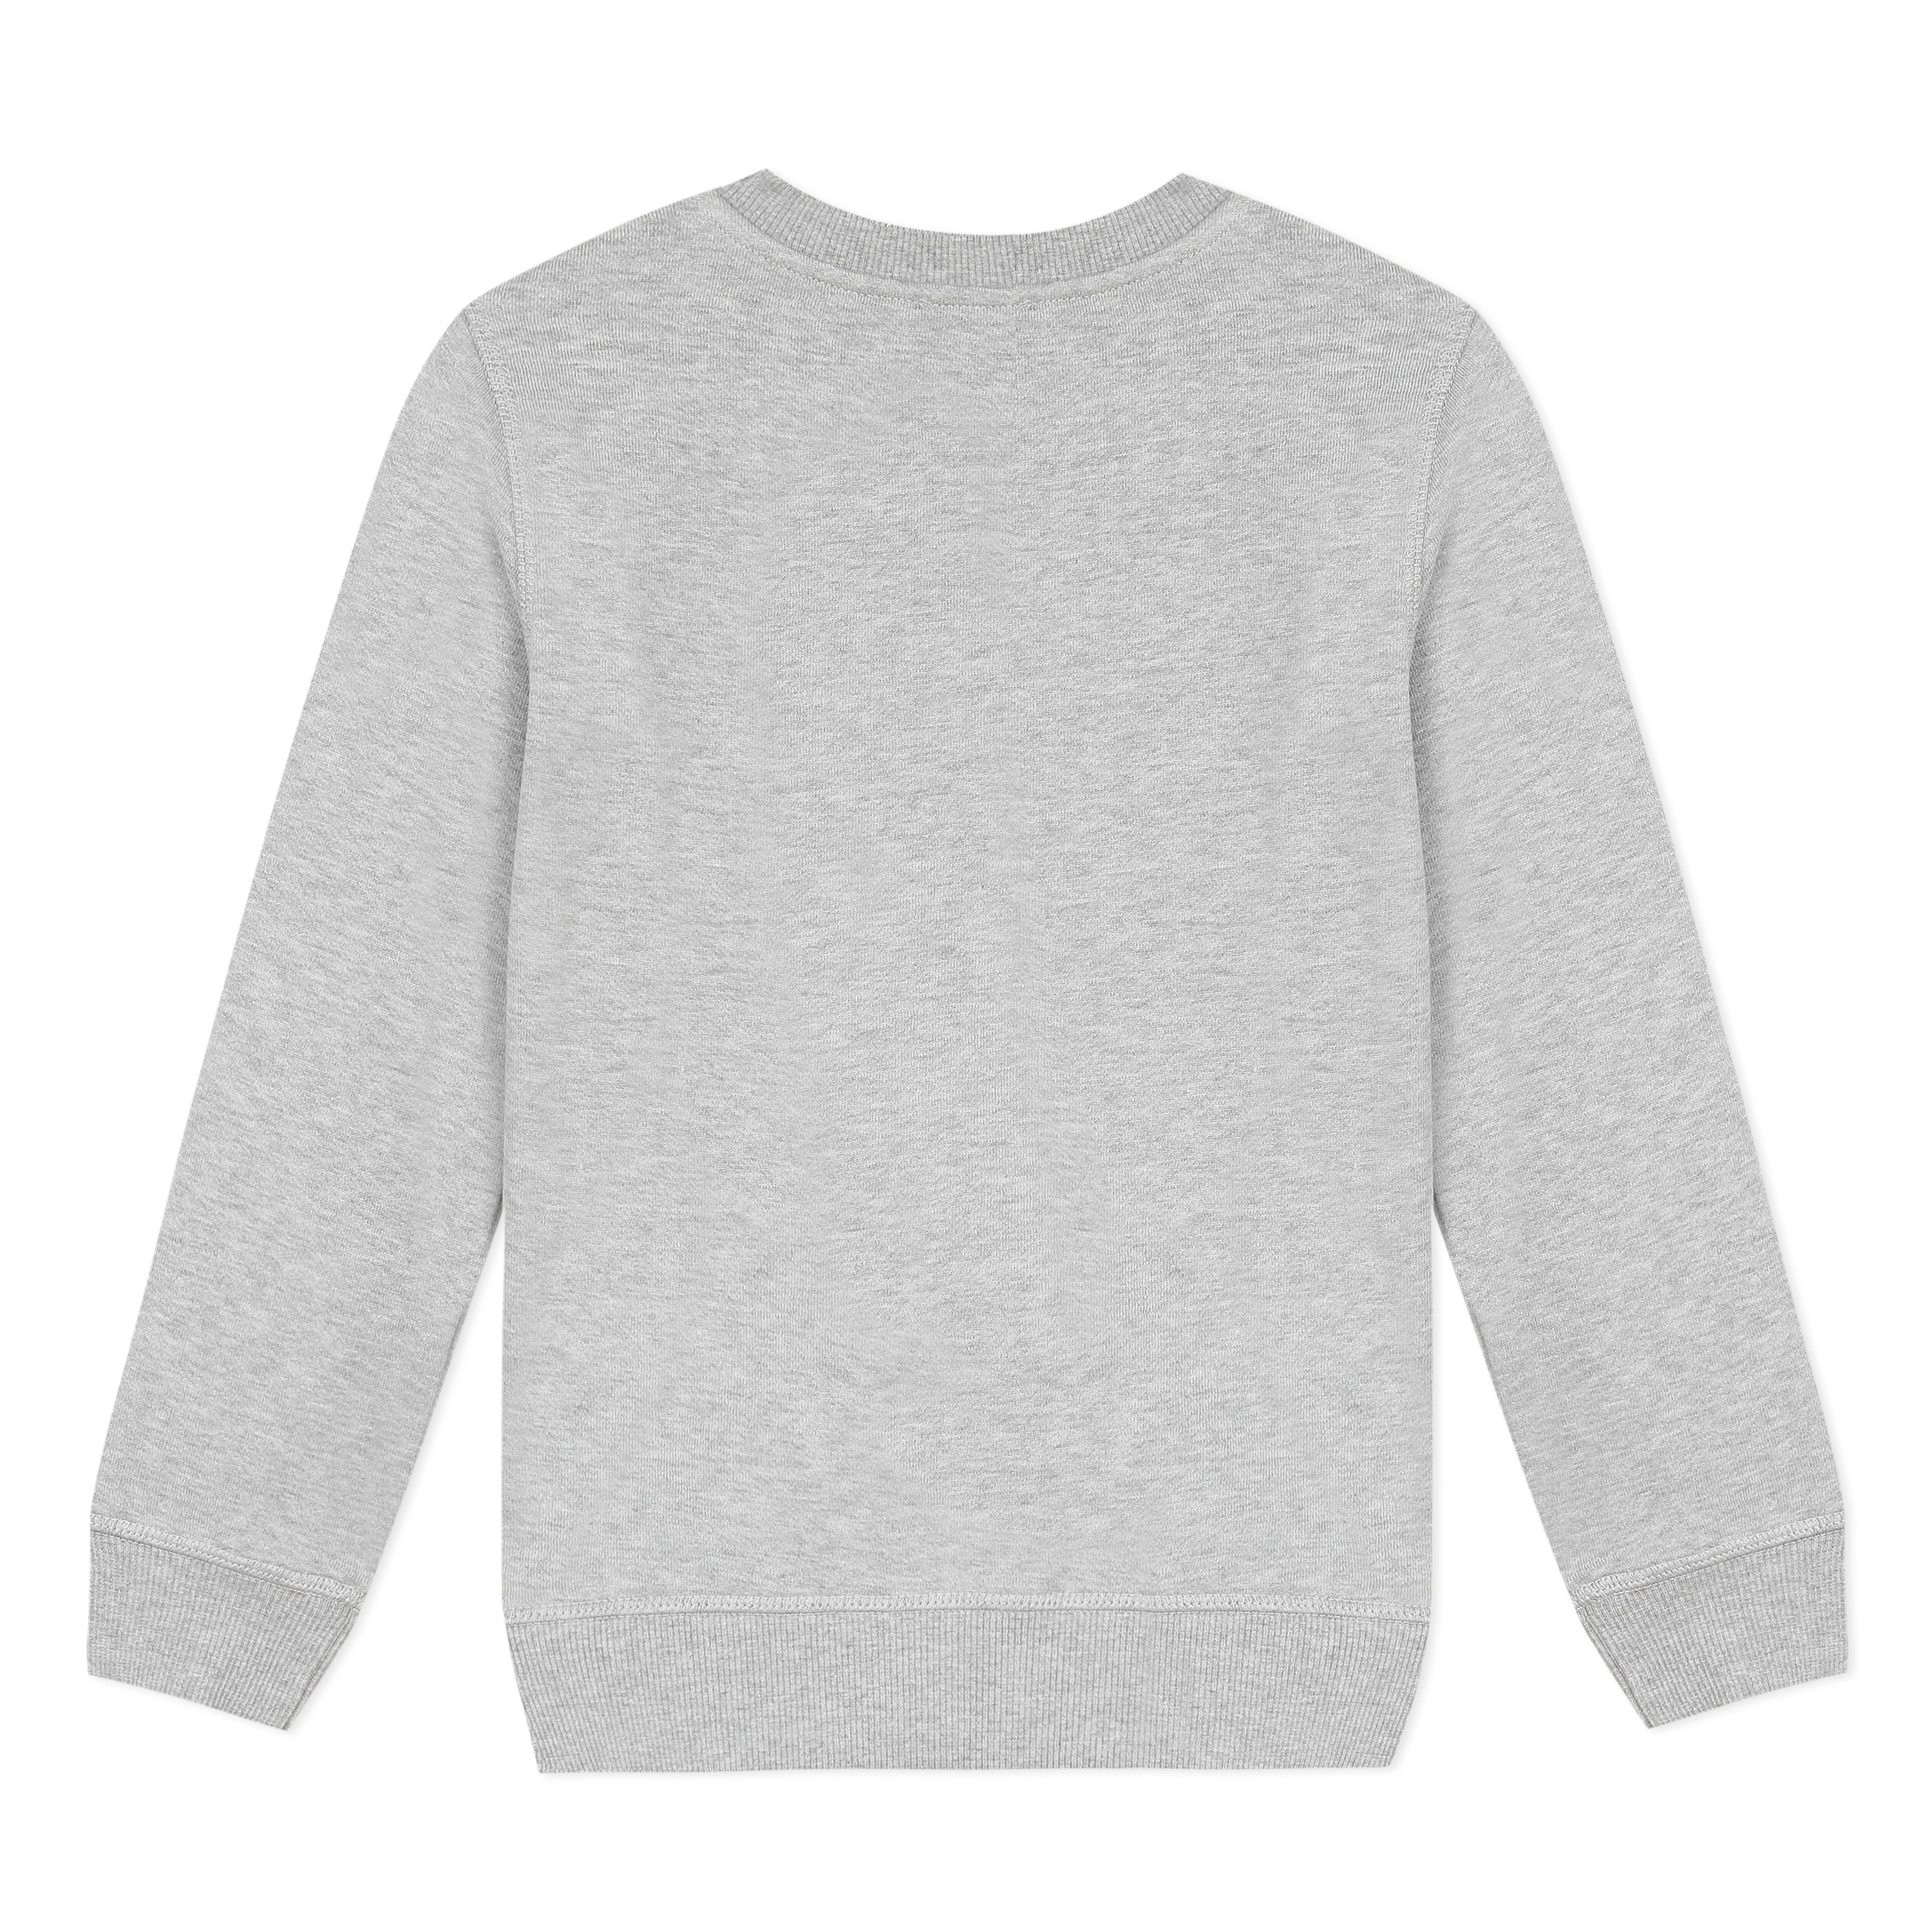 Girls Light Grey Cotton Sweatshirt